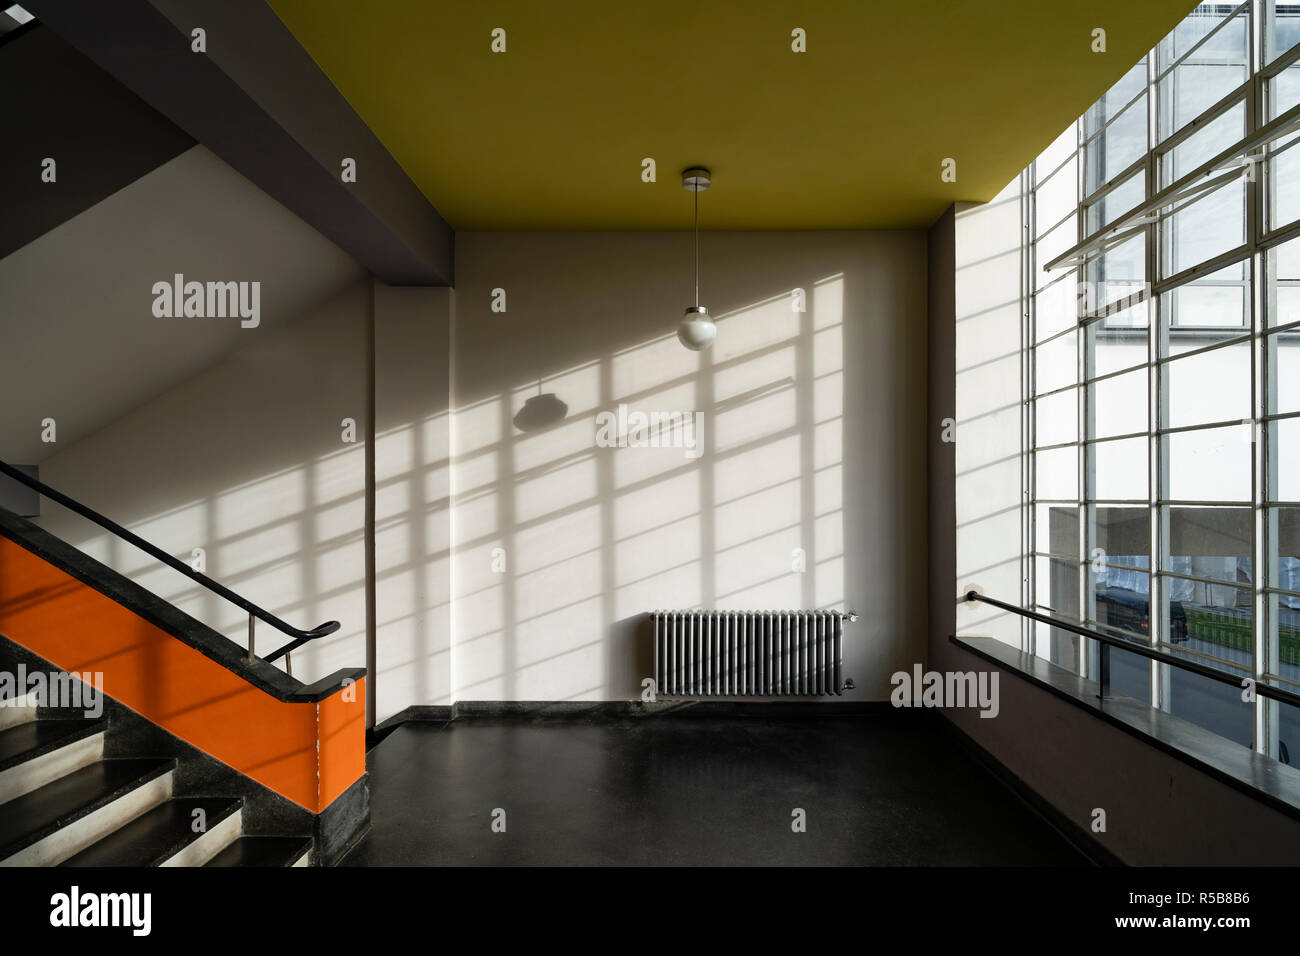 Bauhaus dessau interior fotografías e imágenes de alta resolución - Alamy